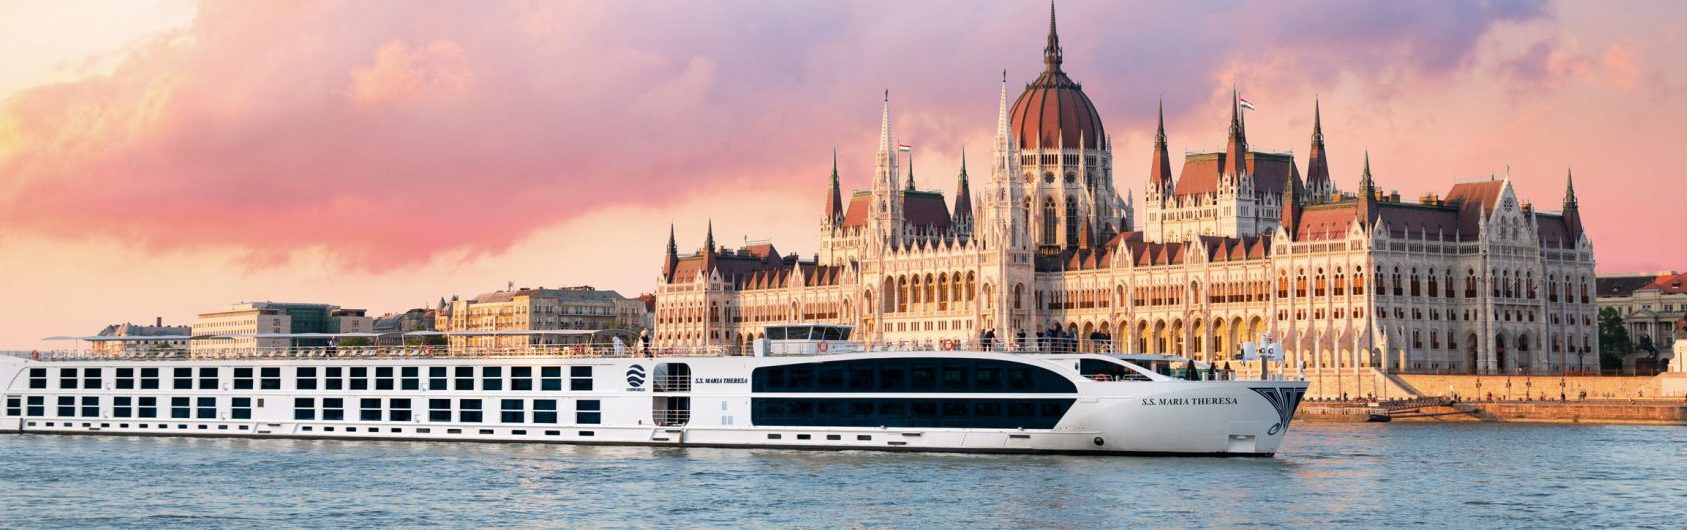 Jane McDonald Uniworld Danube River Cruise SS Maria Theresa